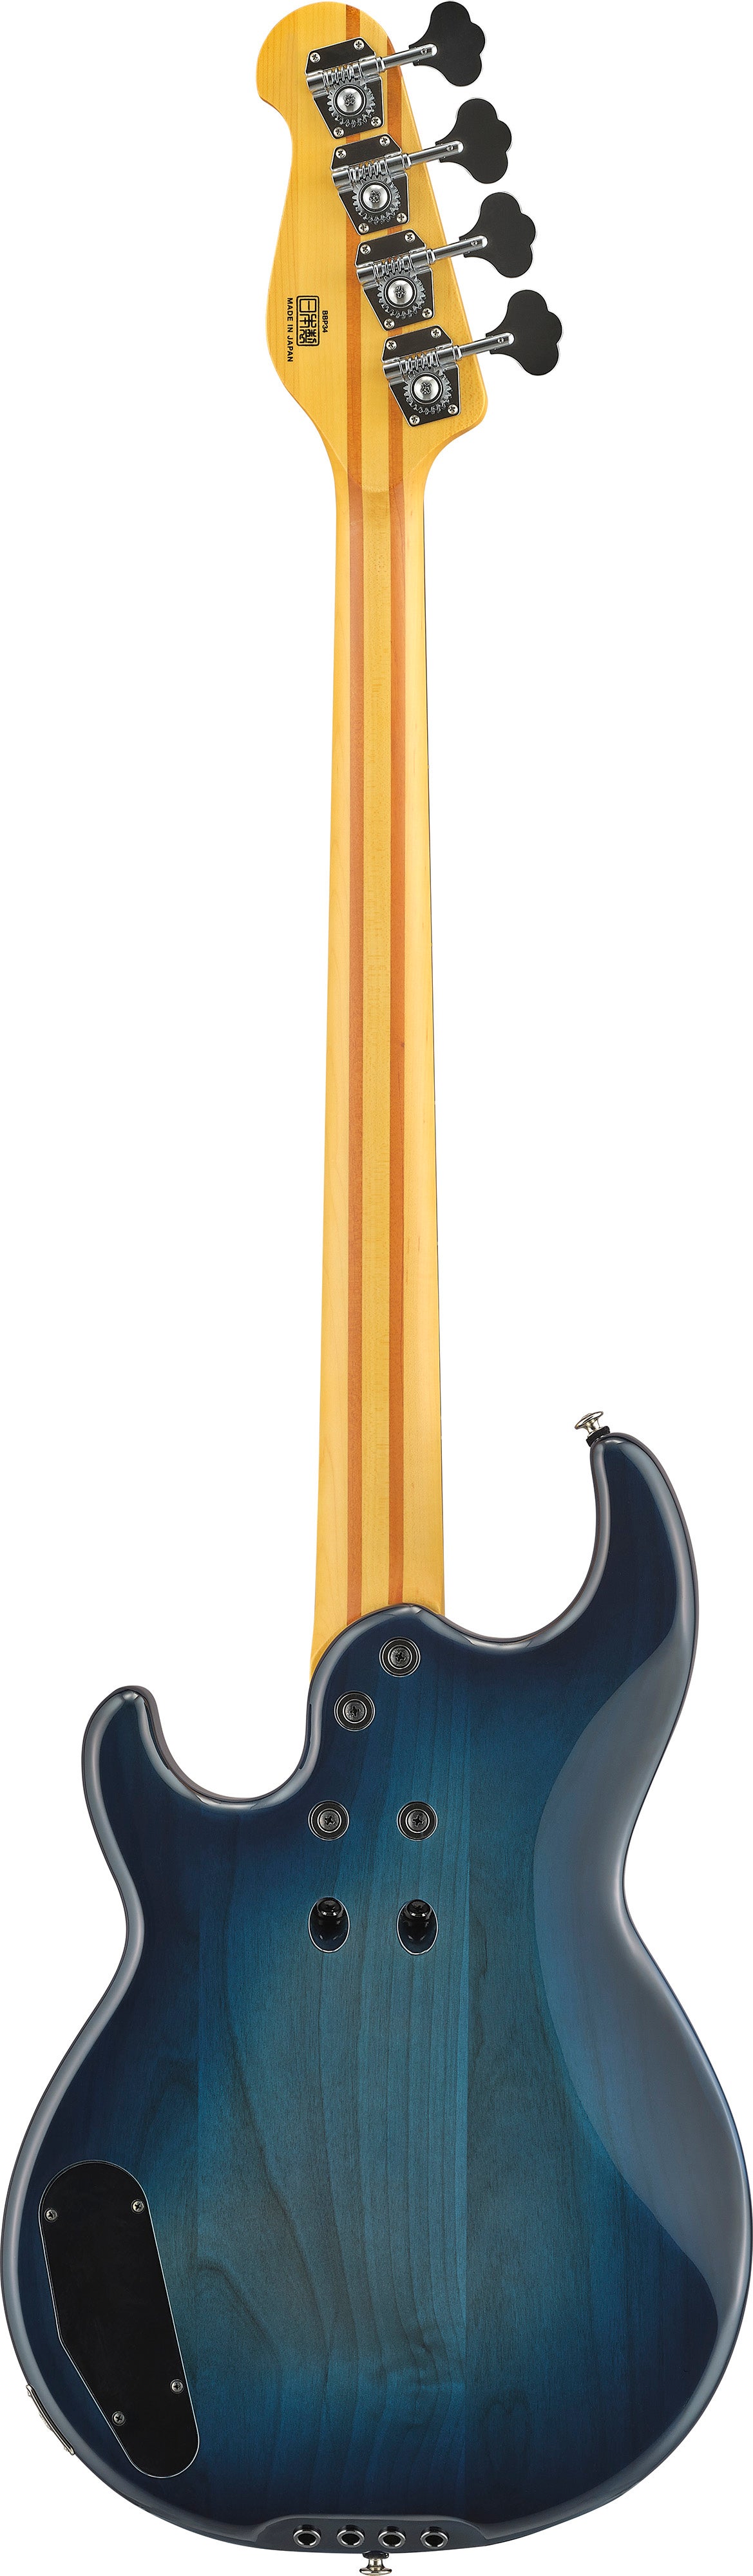 Yamaha Bbp34 4-string Electric Bass Guitar - Moonlight Blue 